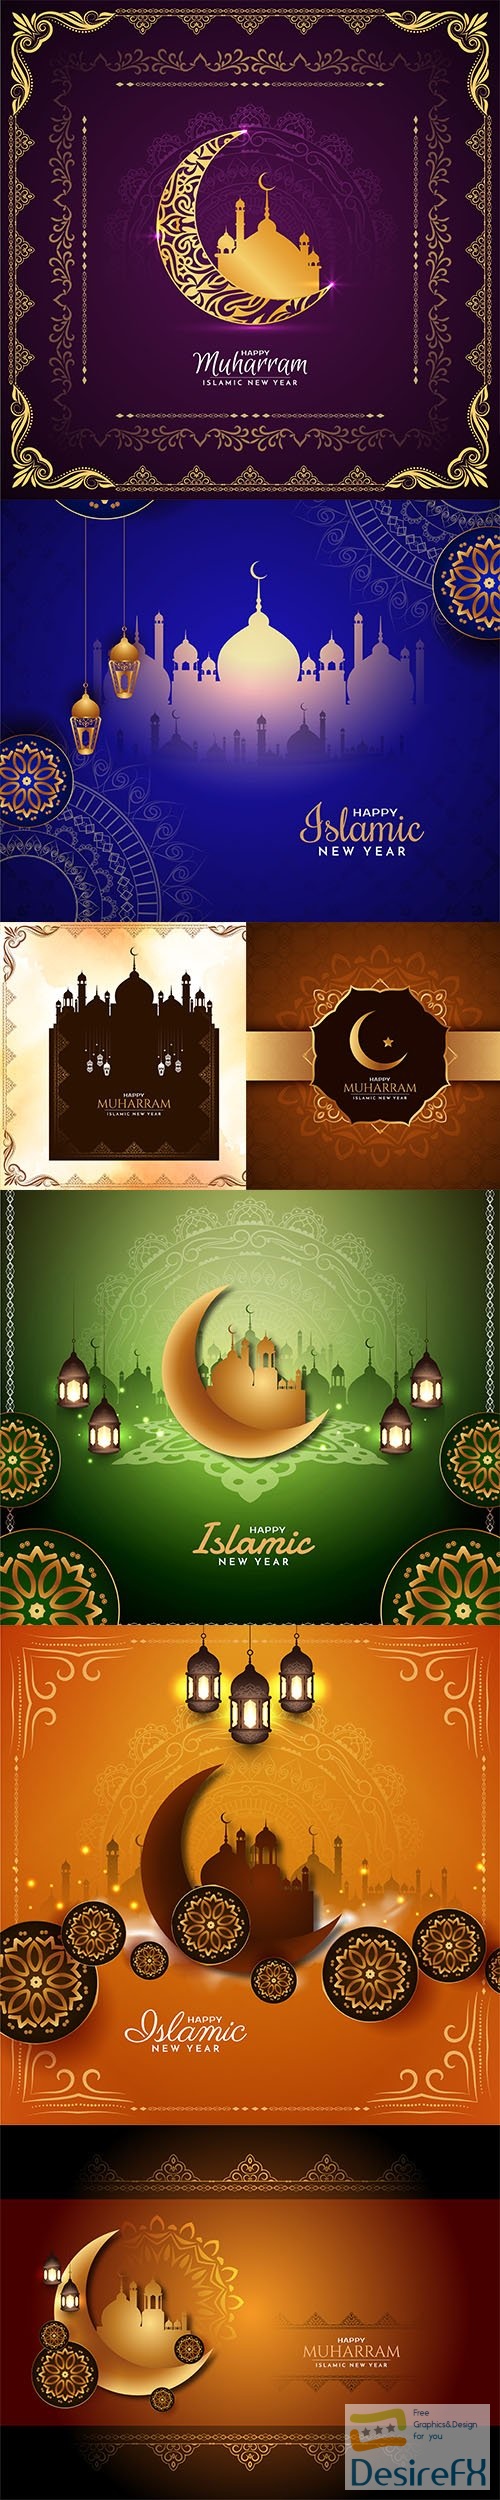 Happy muharram islamic new year crescent moon background vector